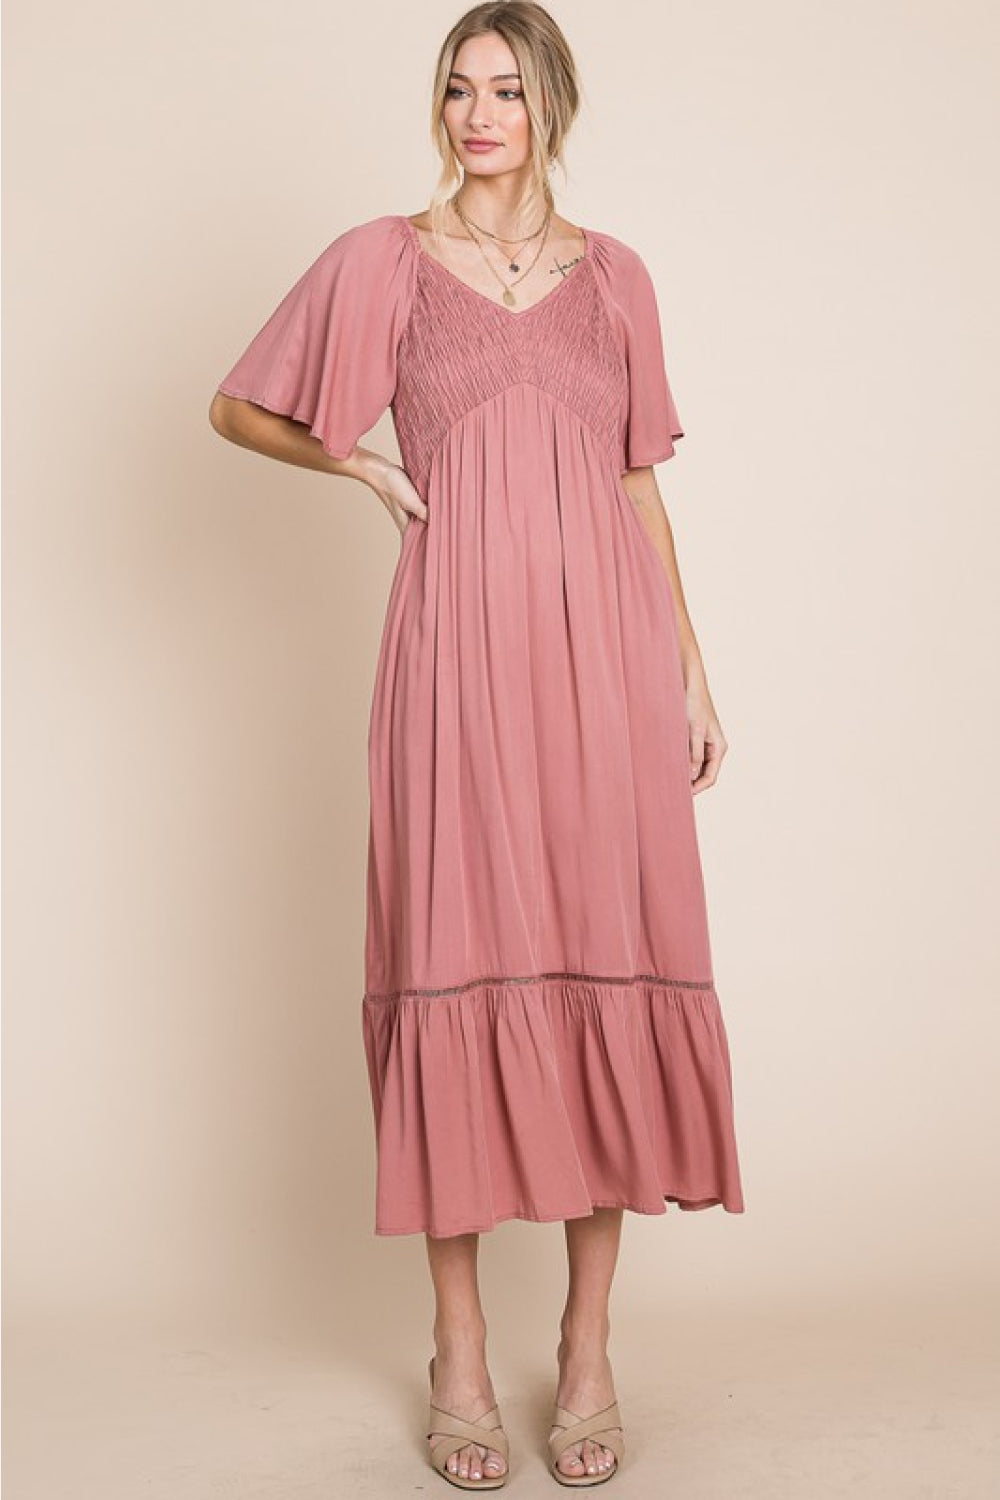 HEYSON Full Size Smocked Pocket Midi Dress in Rouge Pink - OniTakai